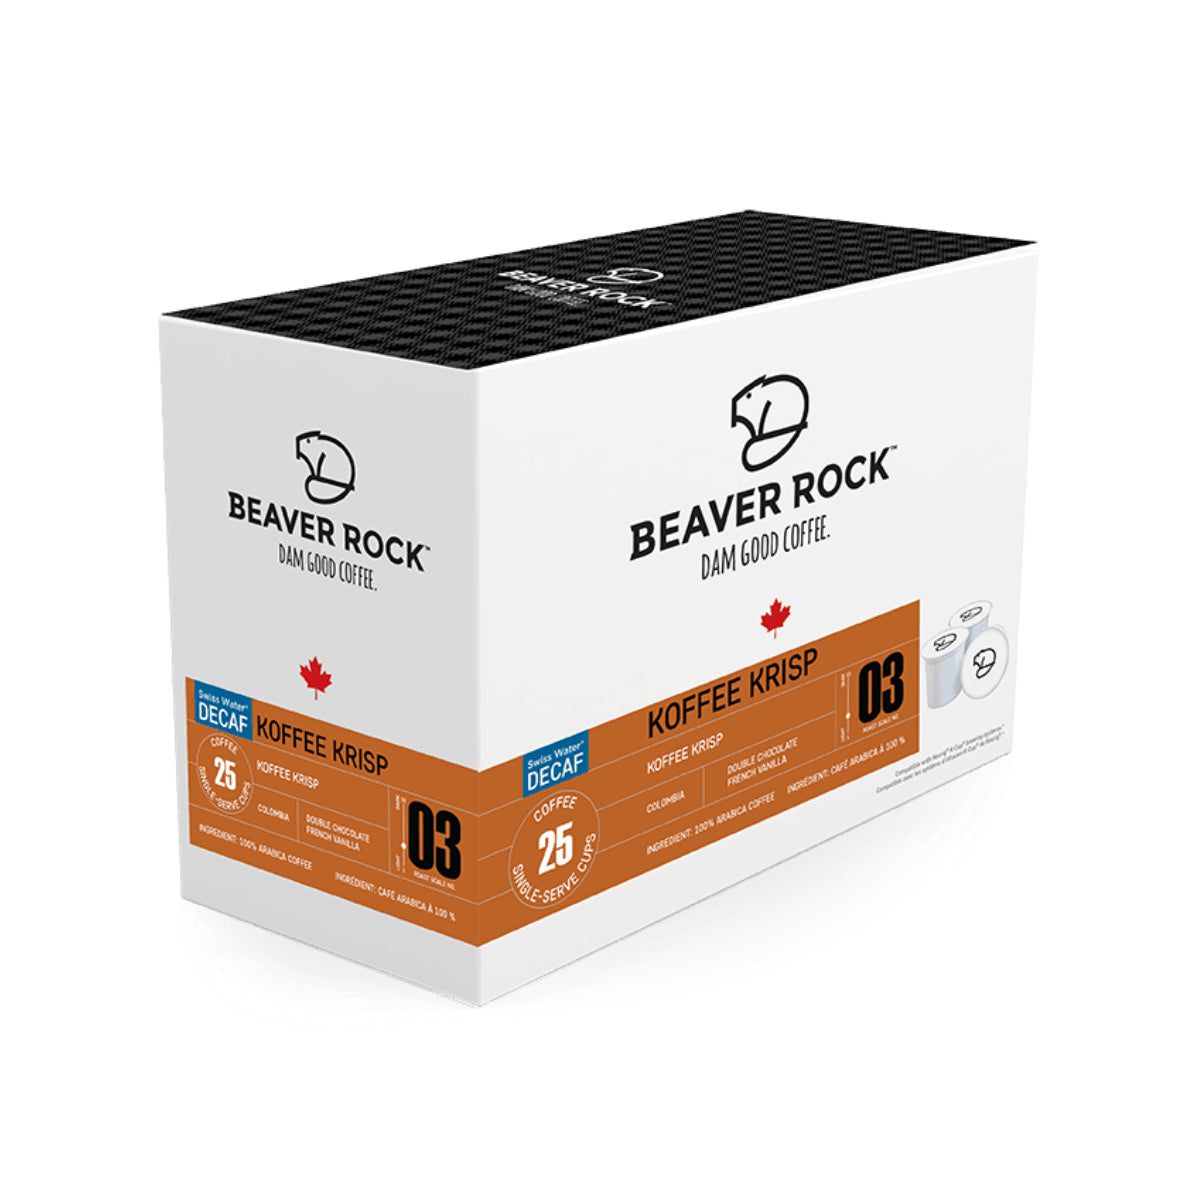 Beaver Rock Koffee Krisp Decaf Single-Serve Coffee Pods